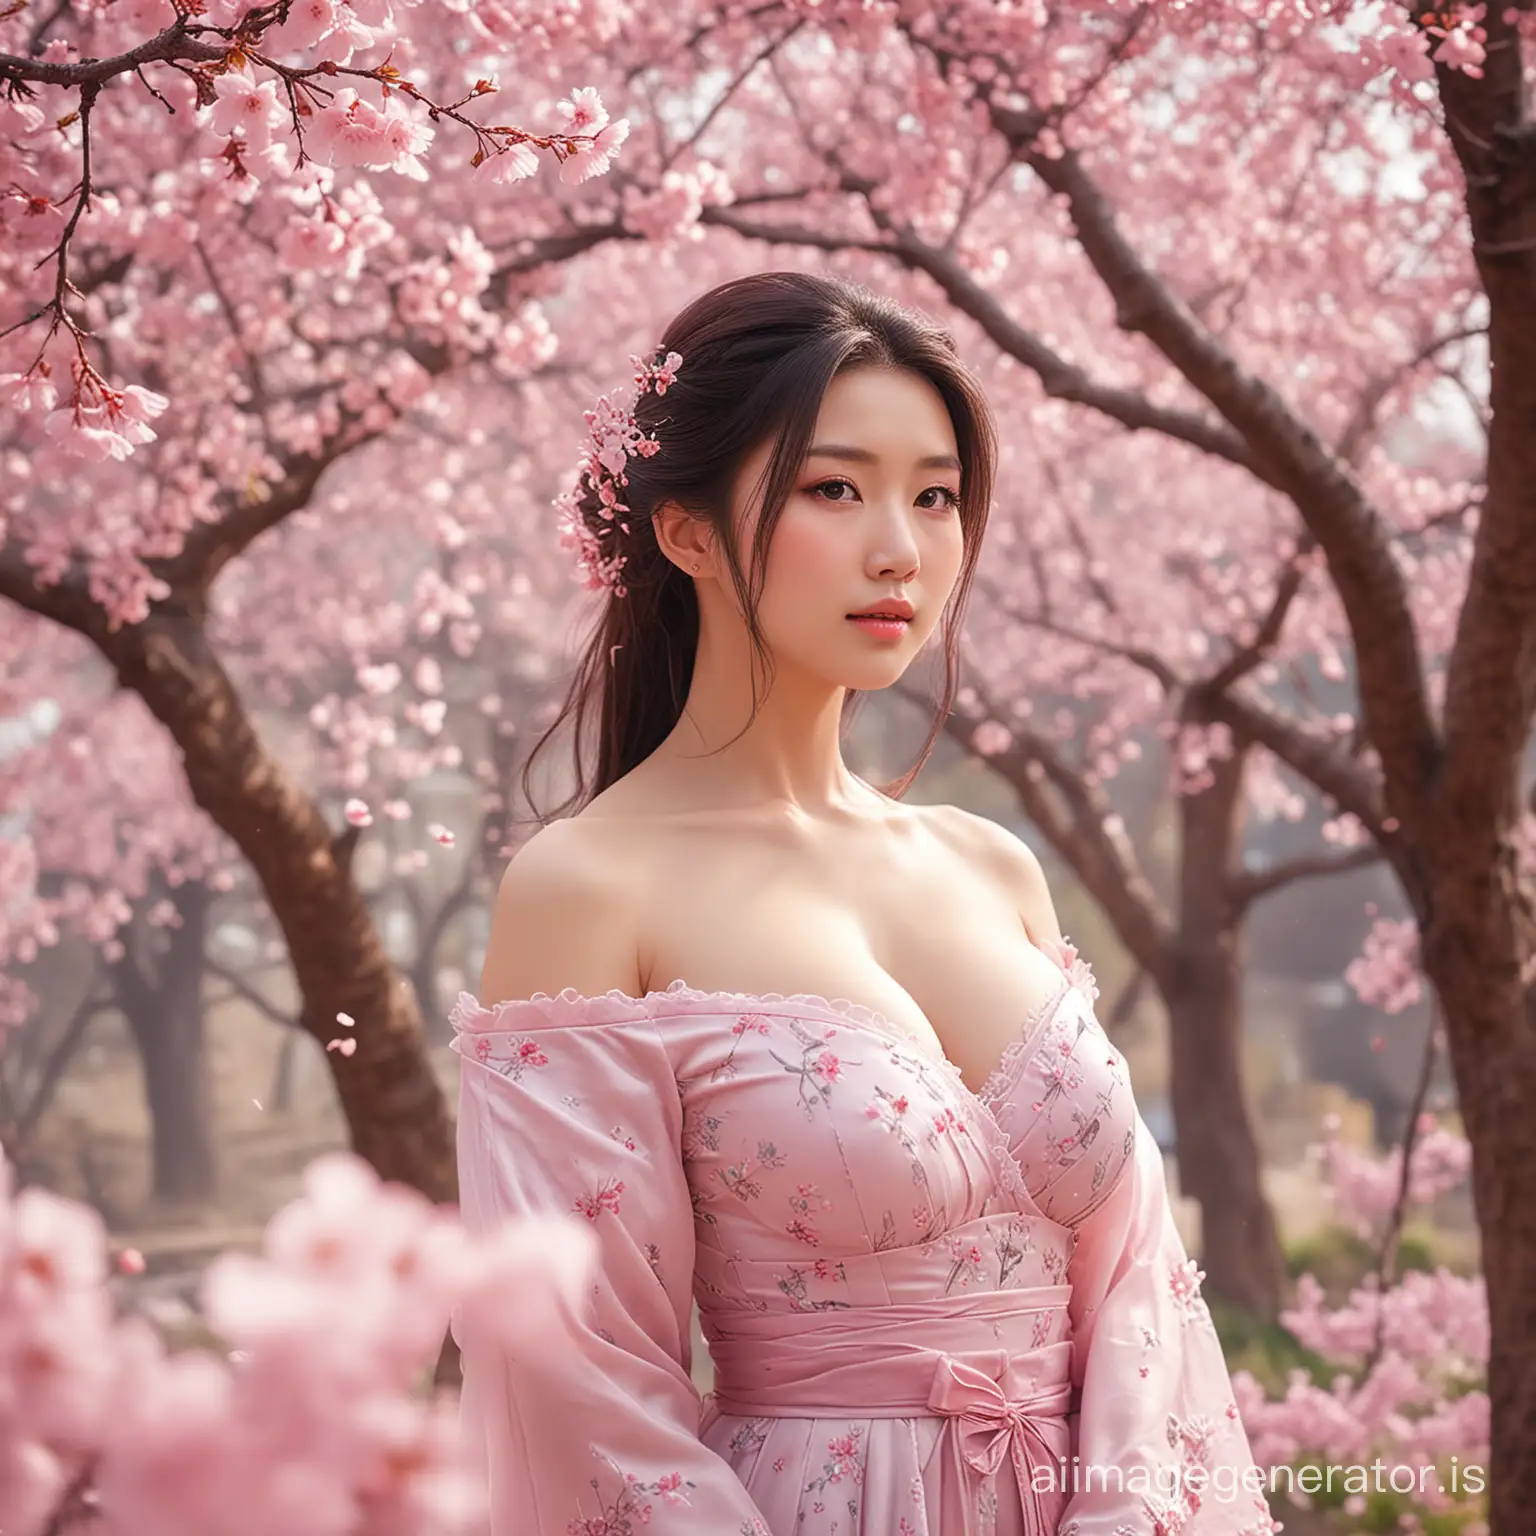 Ethereal-Fantasy-Portrait-Korean-Woman-under-Cherry-Blossom-Tree